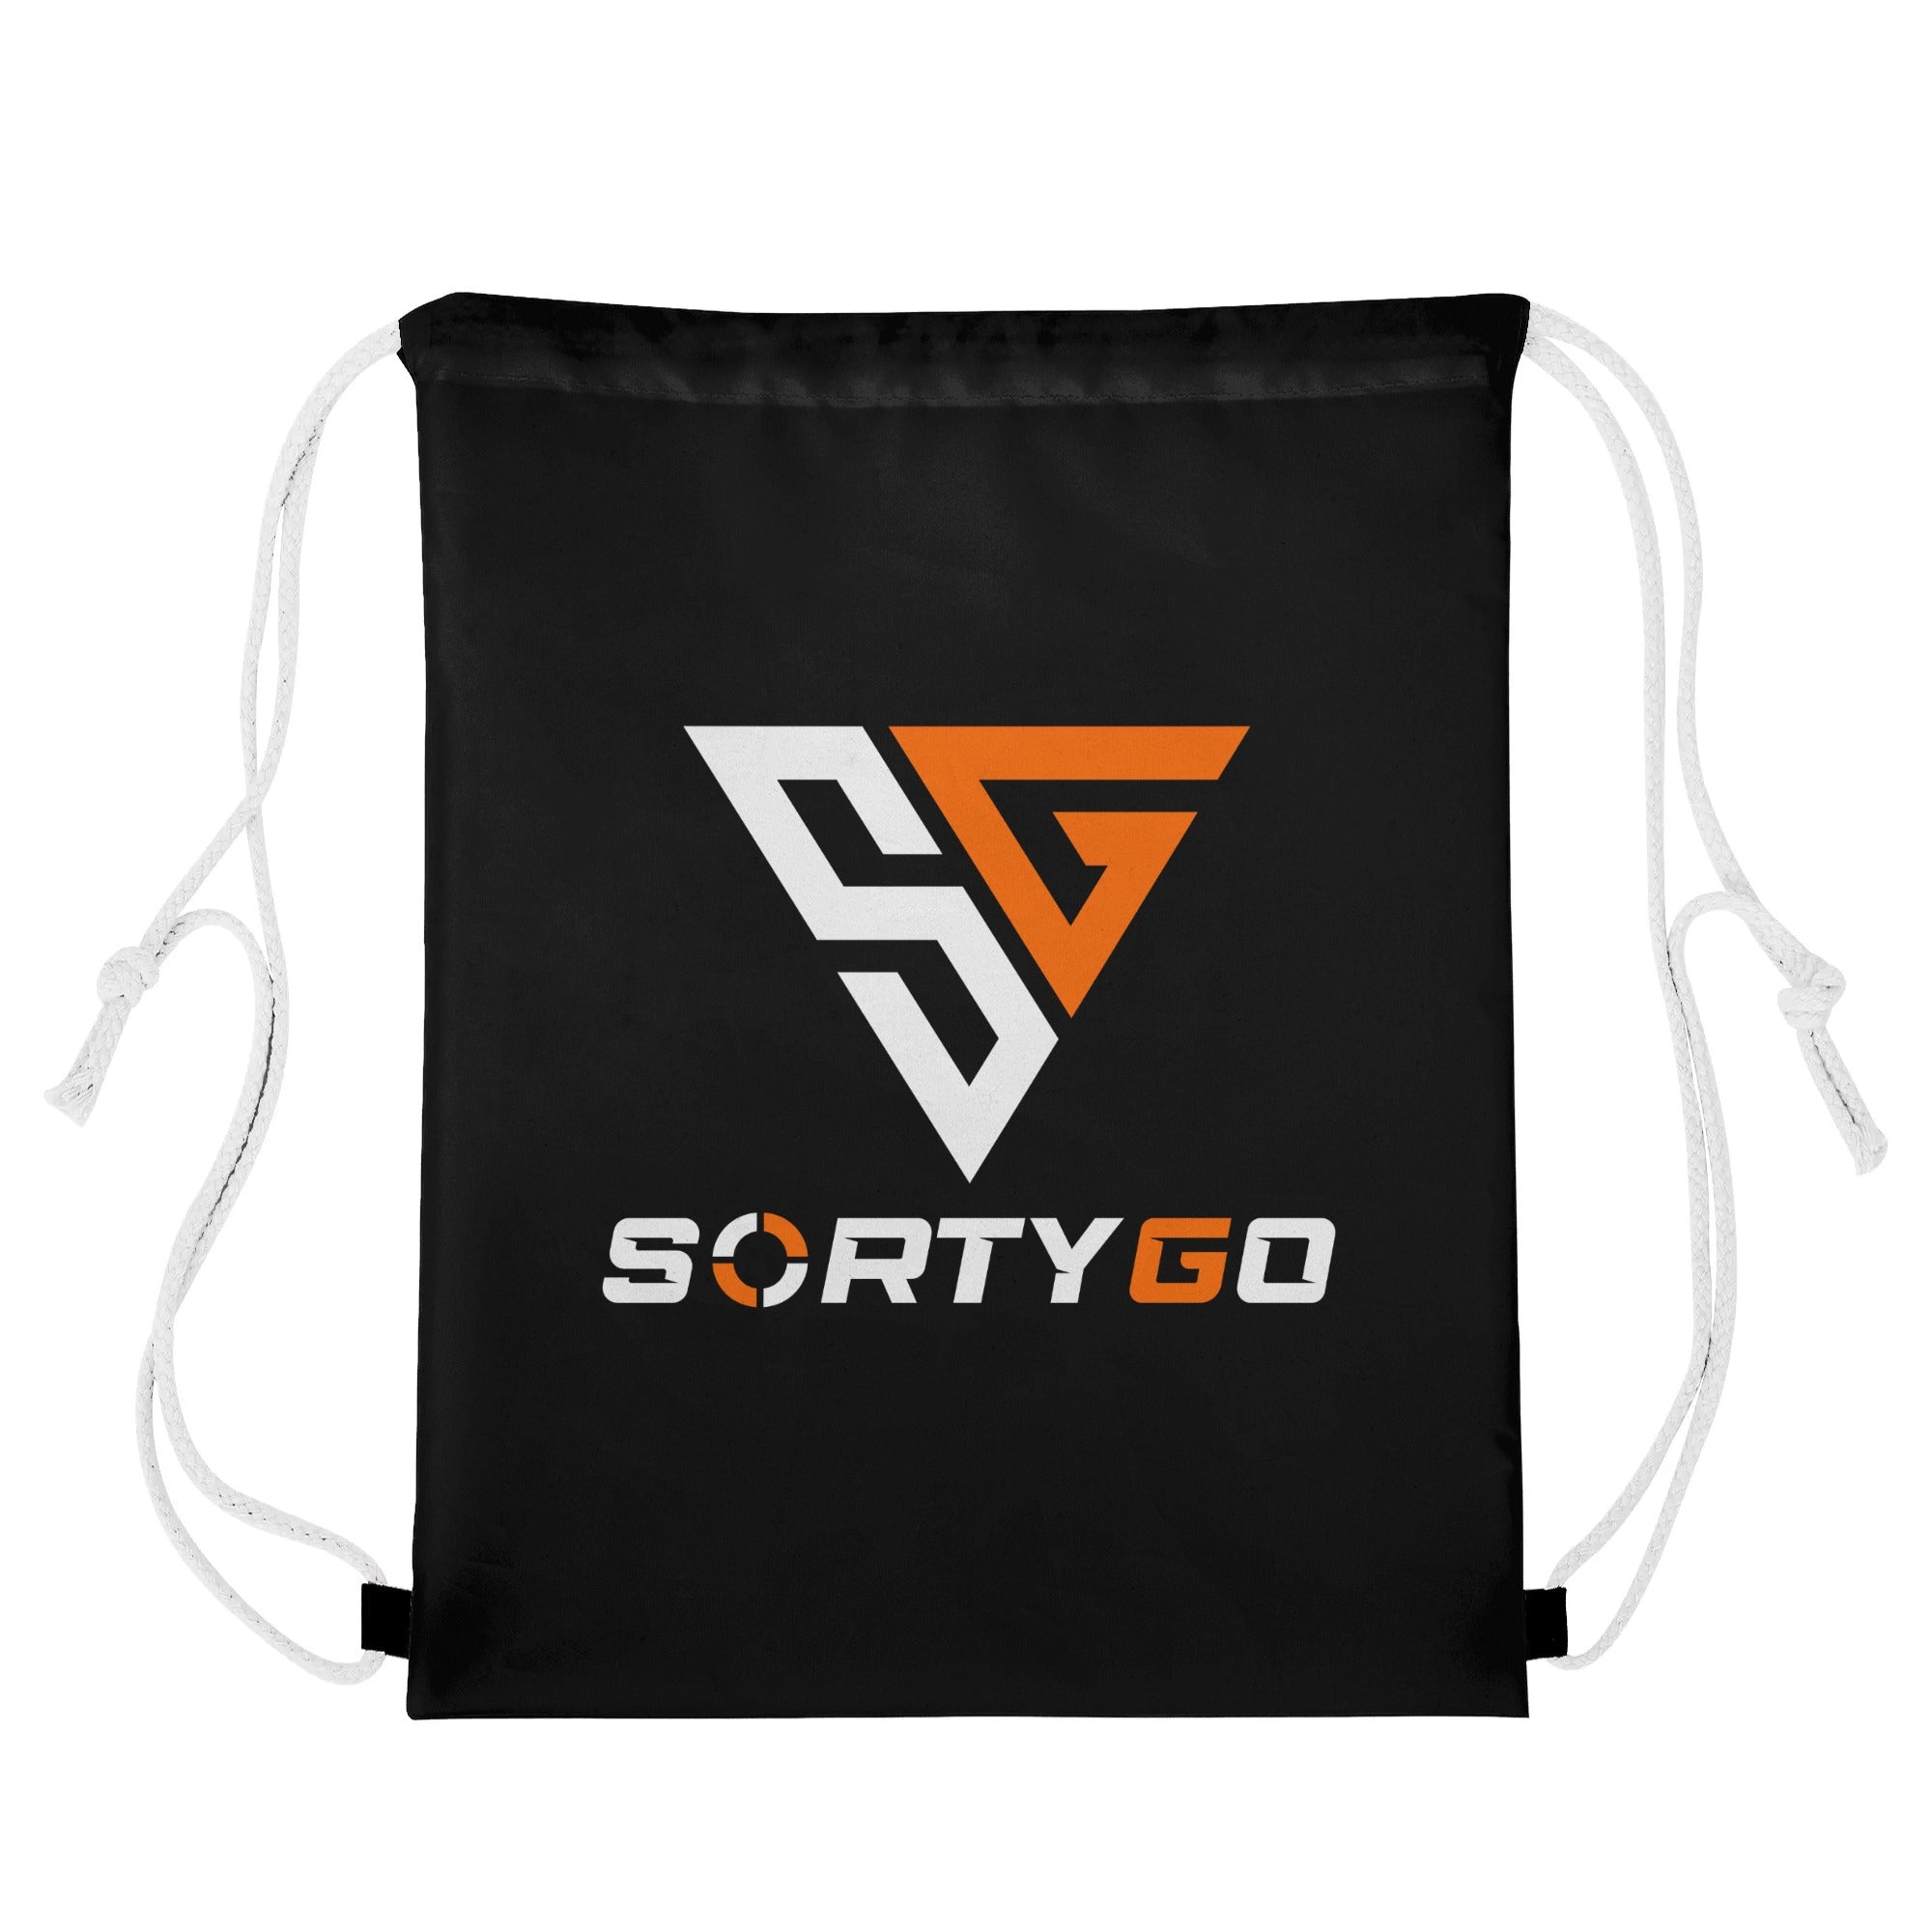 SORTYGO - Lacework Drawstring Bag in